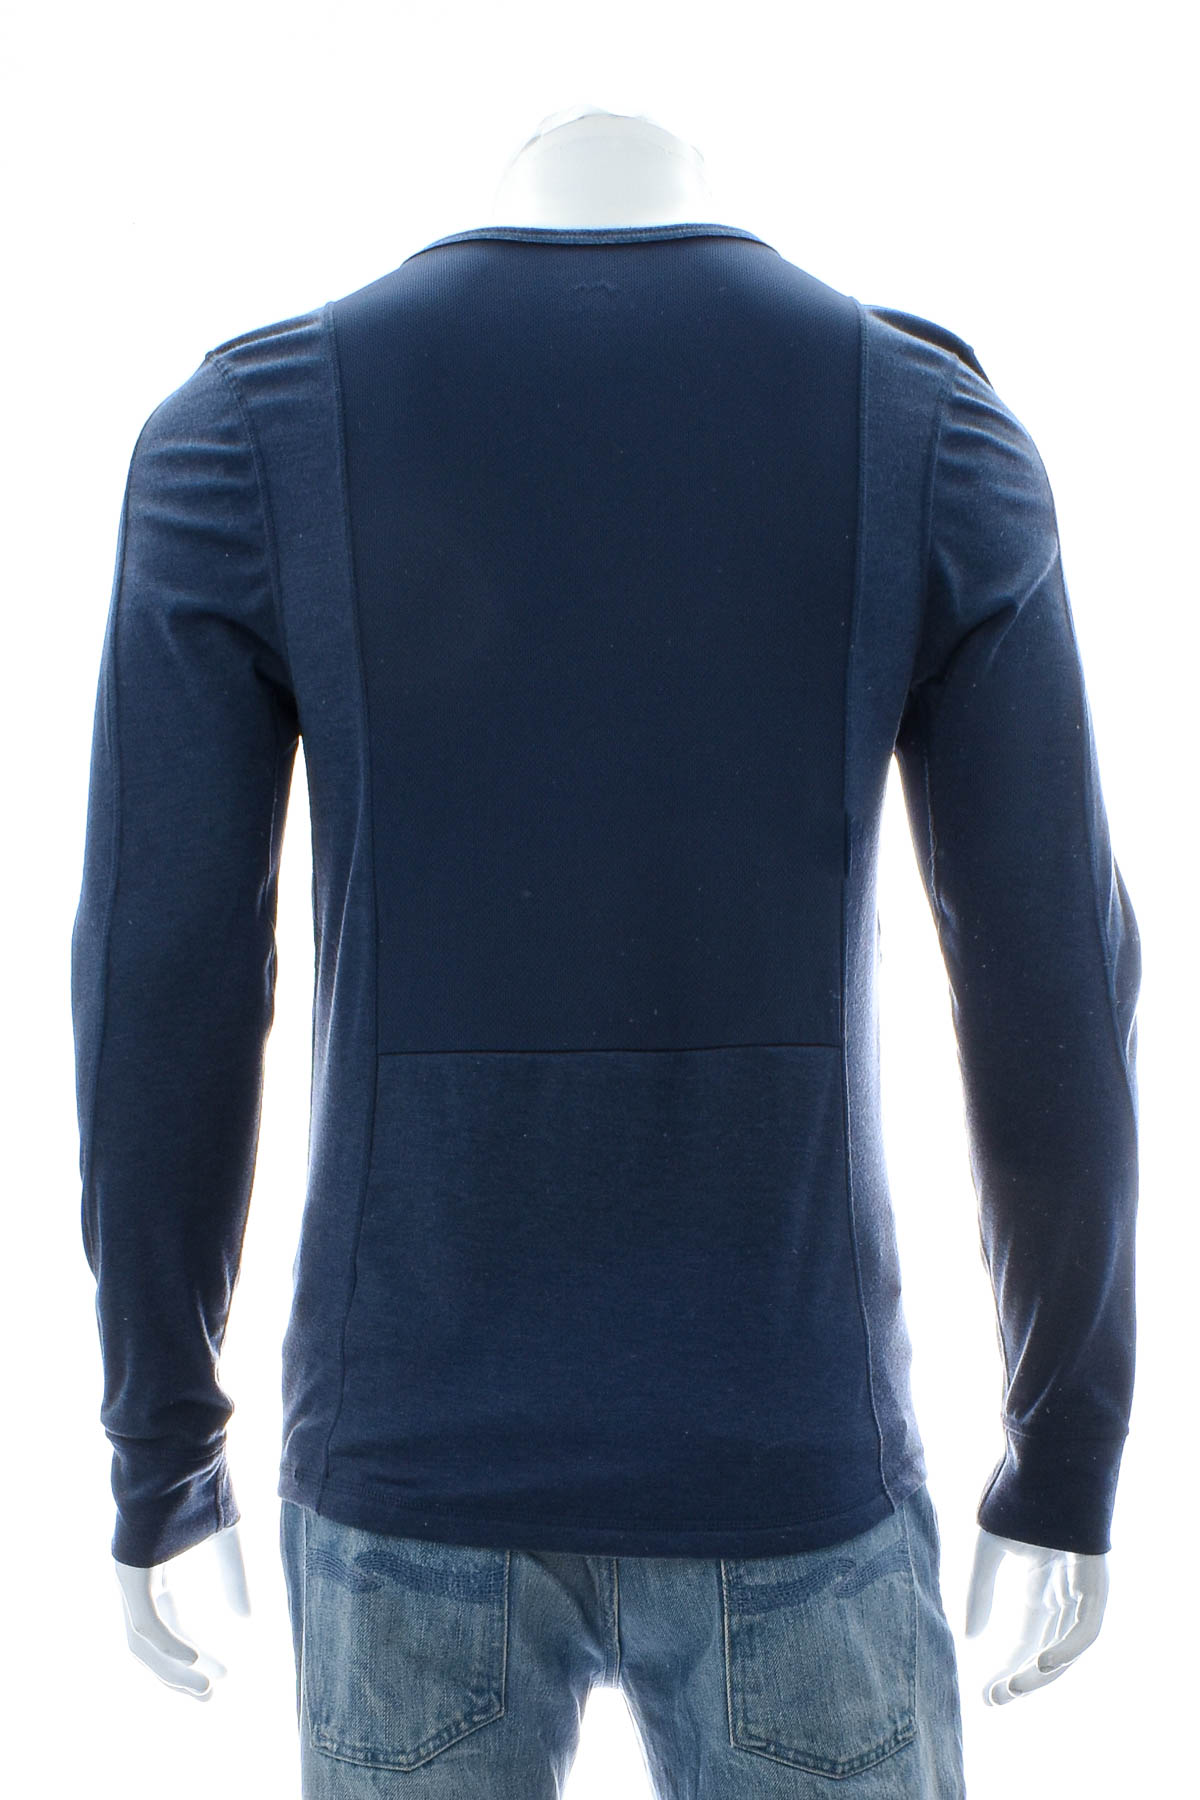 Men's sport blouse - SNOW TECH - 1